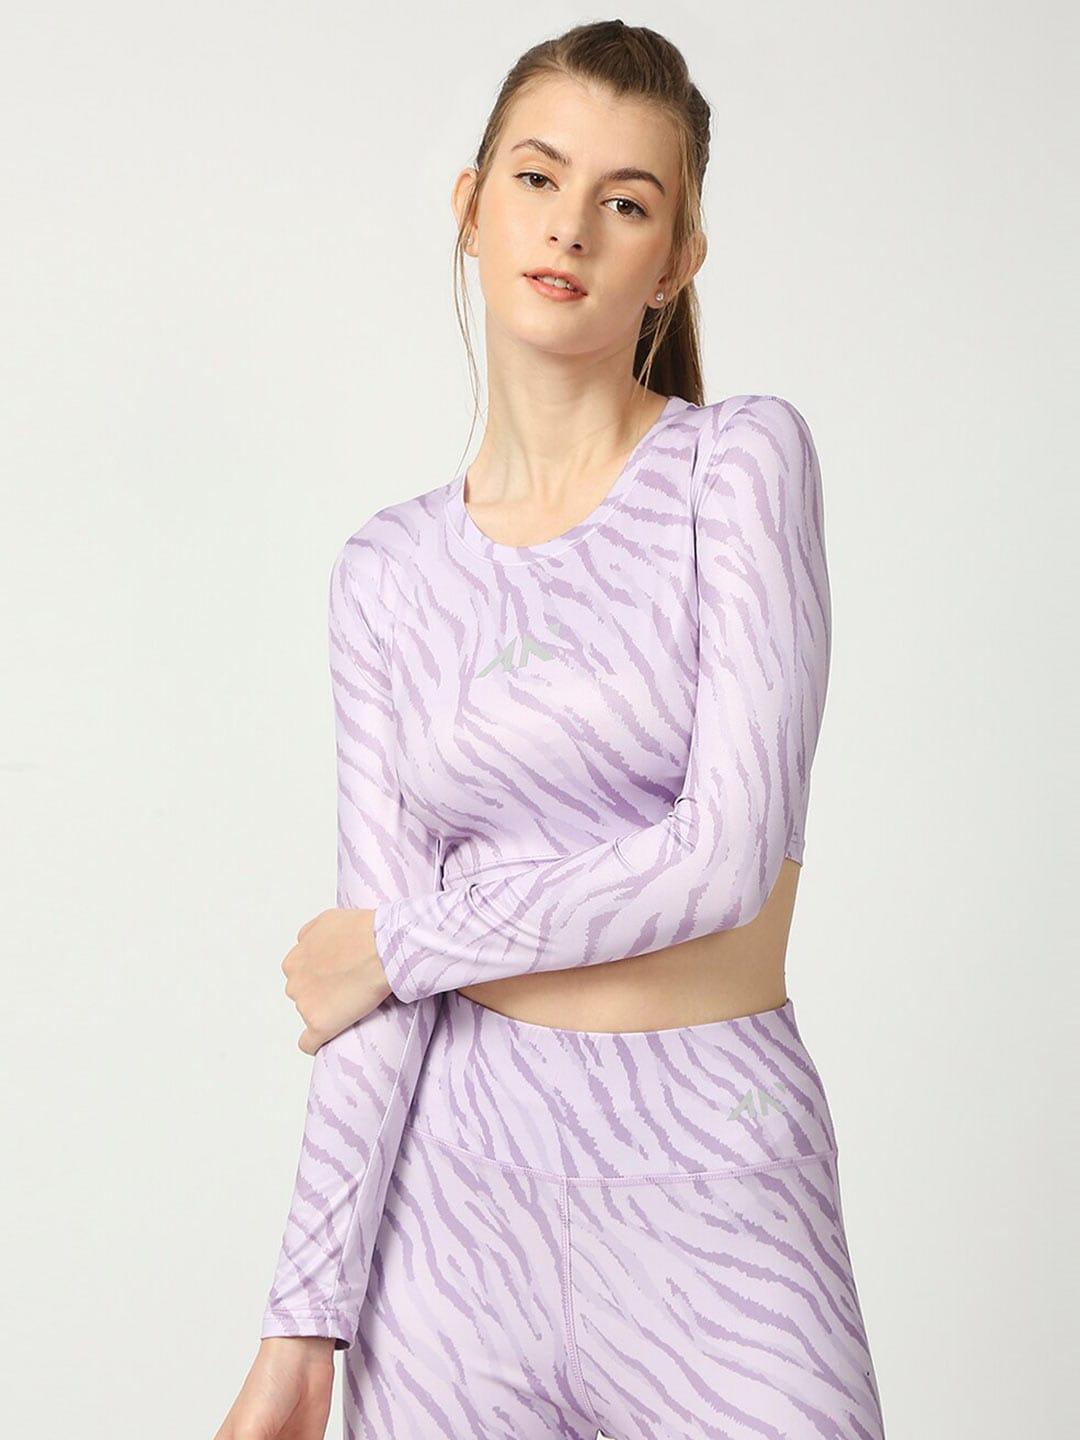 aesthetic-nation-woman-lavender-vogue-crop-top